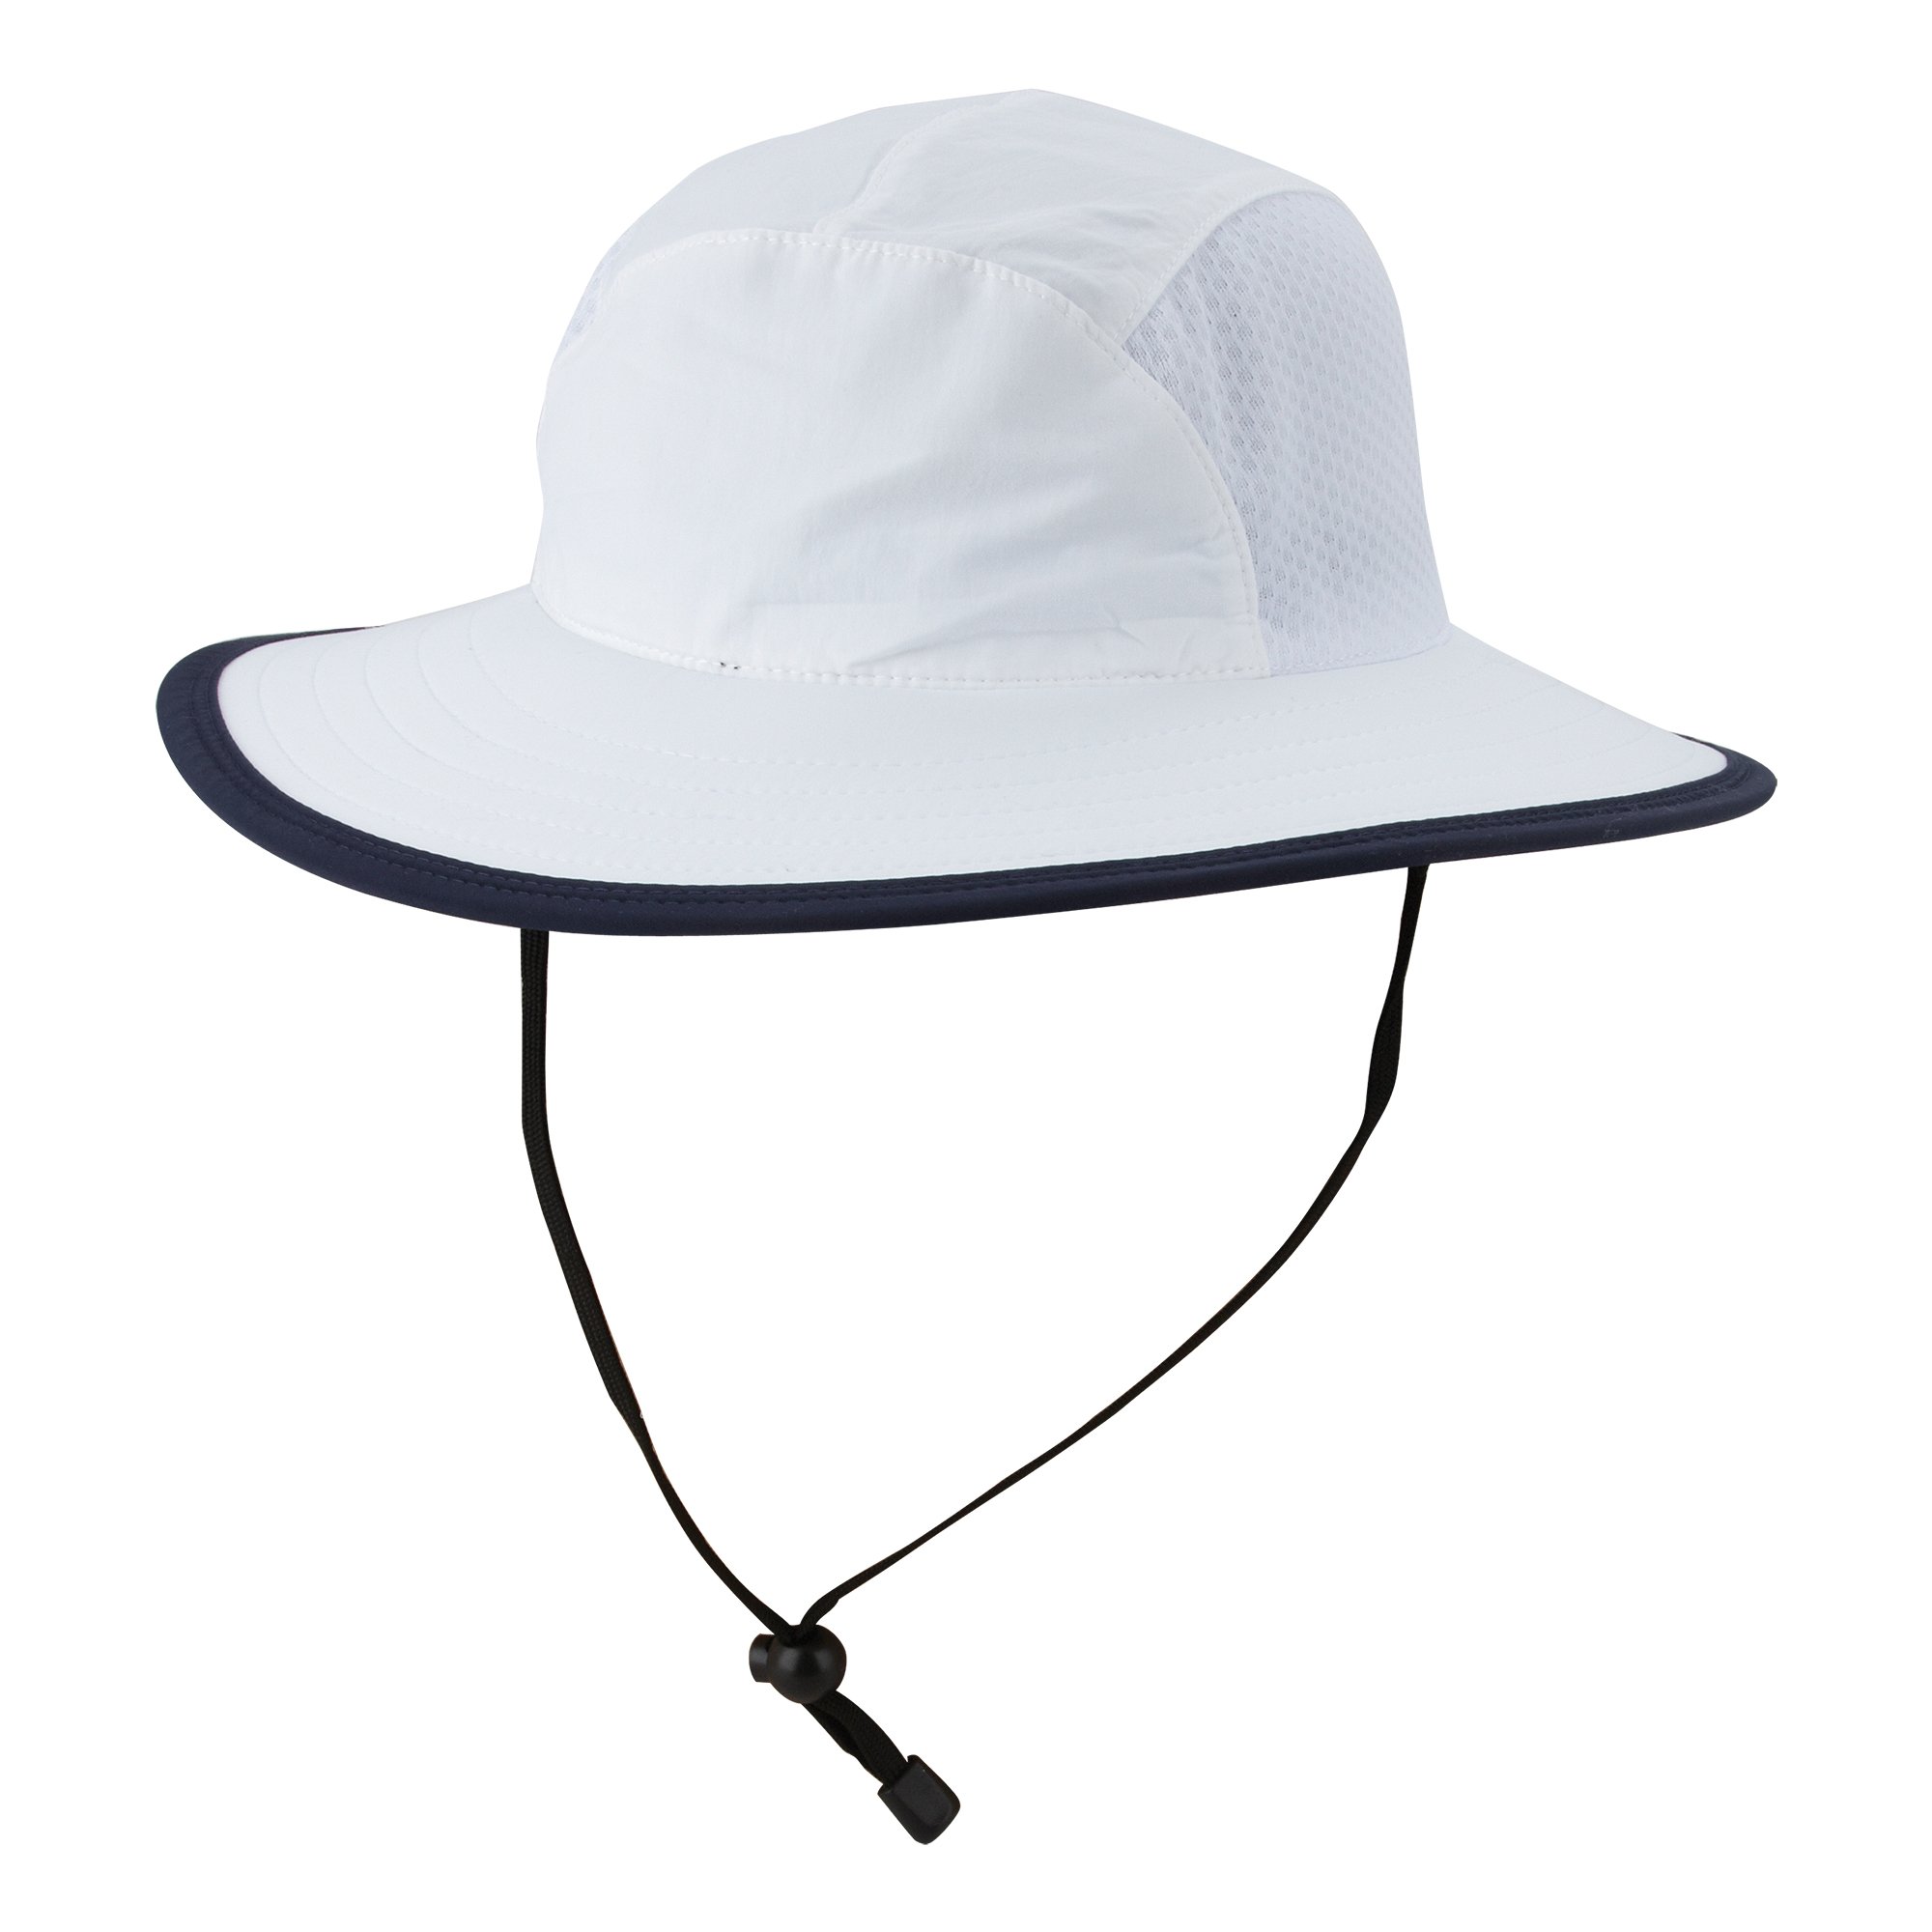 WSSEA - The Seabird Sport Sun-Protection Hat